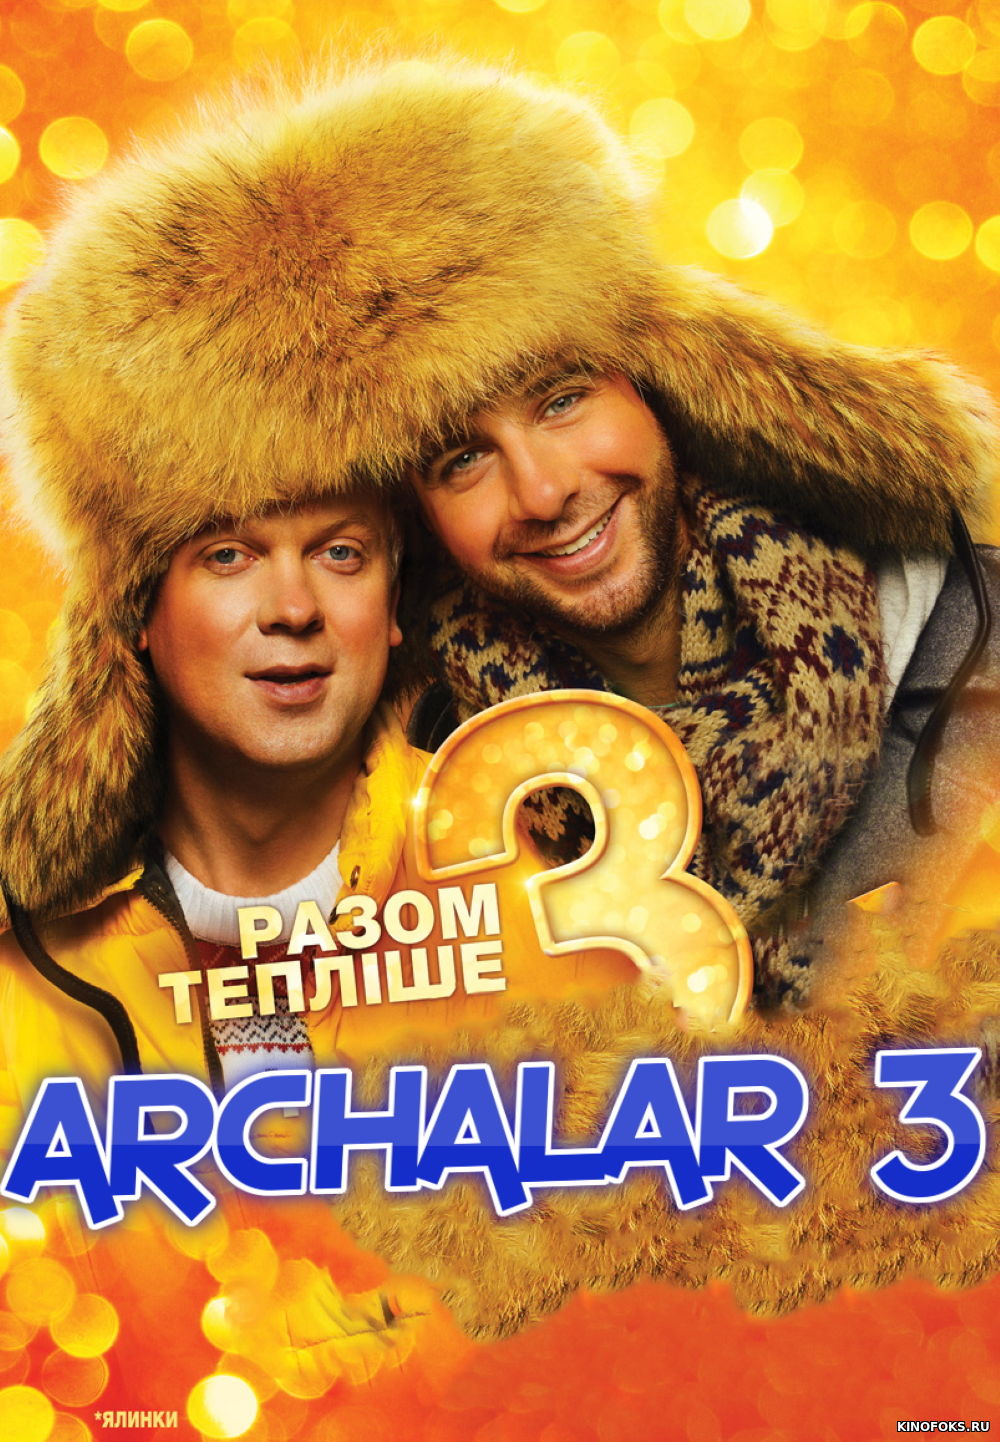 Archalar 3 Rossiya kinosi Uzbek tilida 2013 kino HD